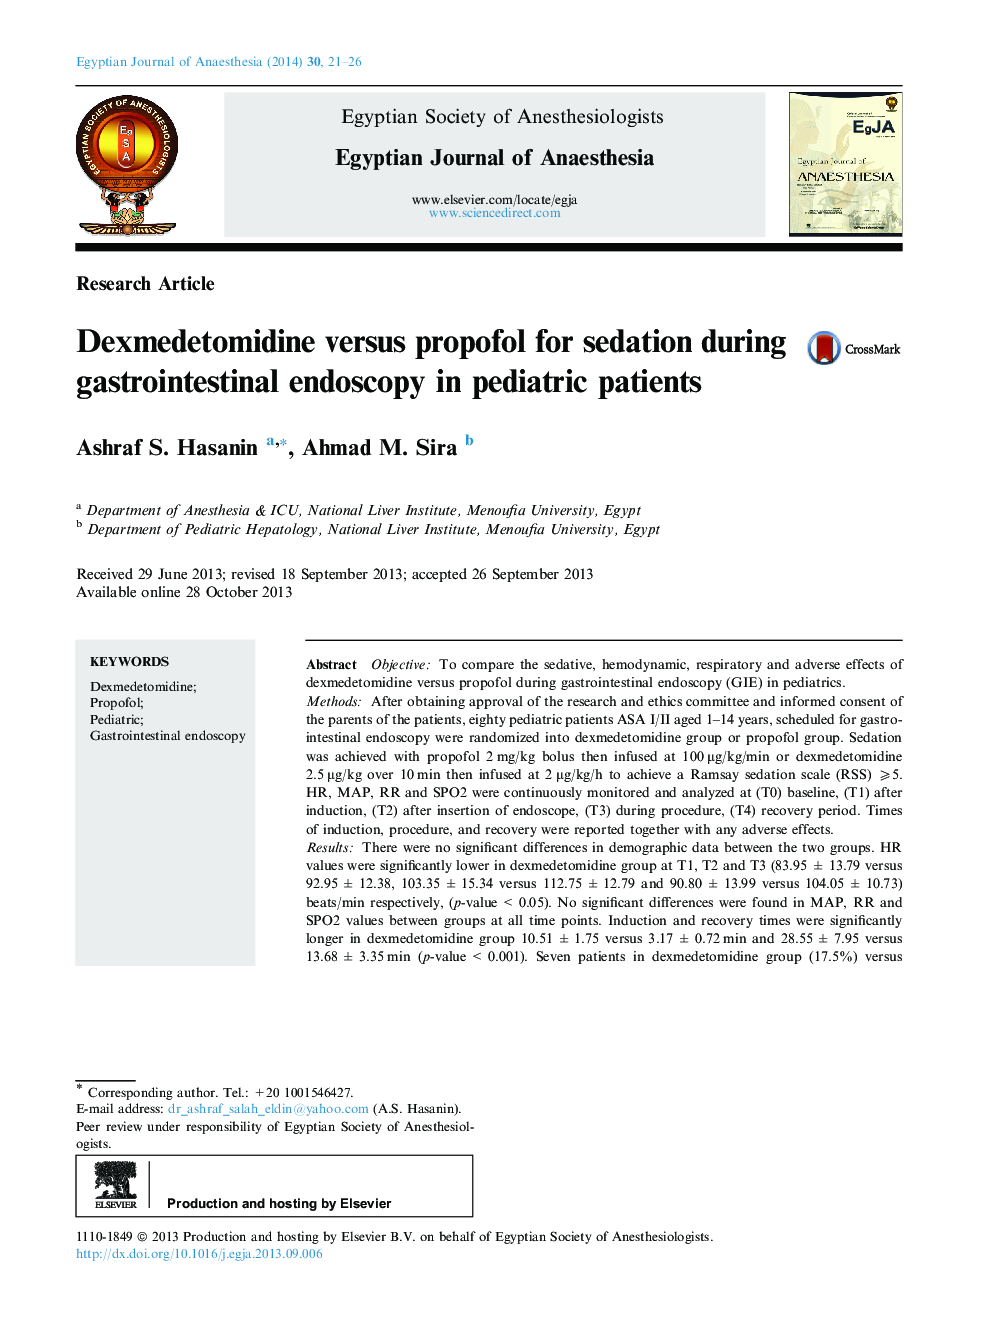 Dexmedetomidine versus propofol for sedation during gastrointestinal endoscopy in pediatric patients 